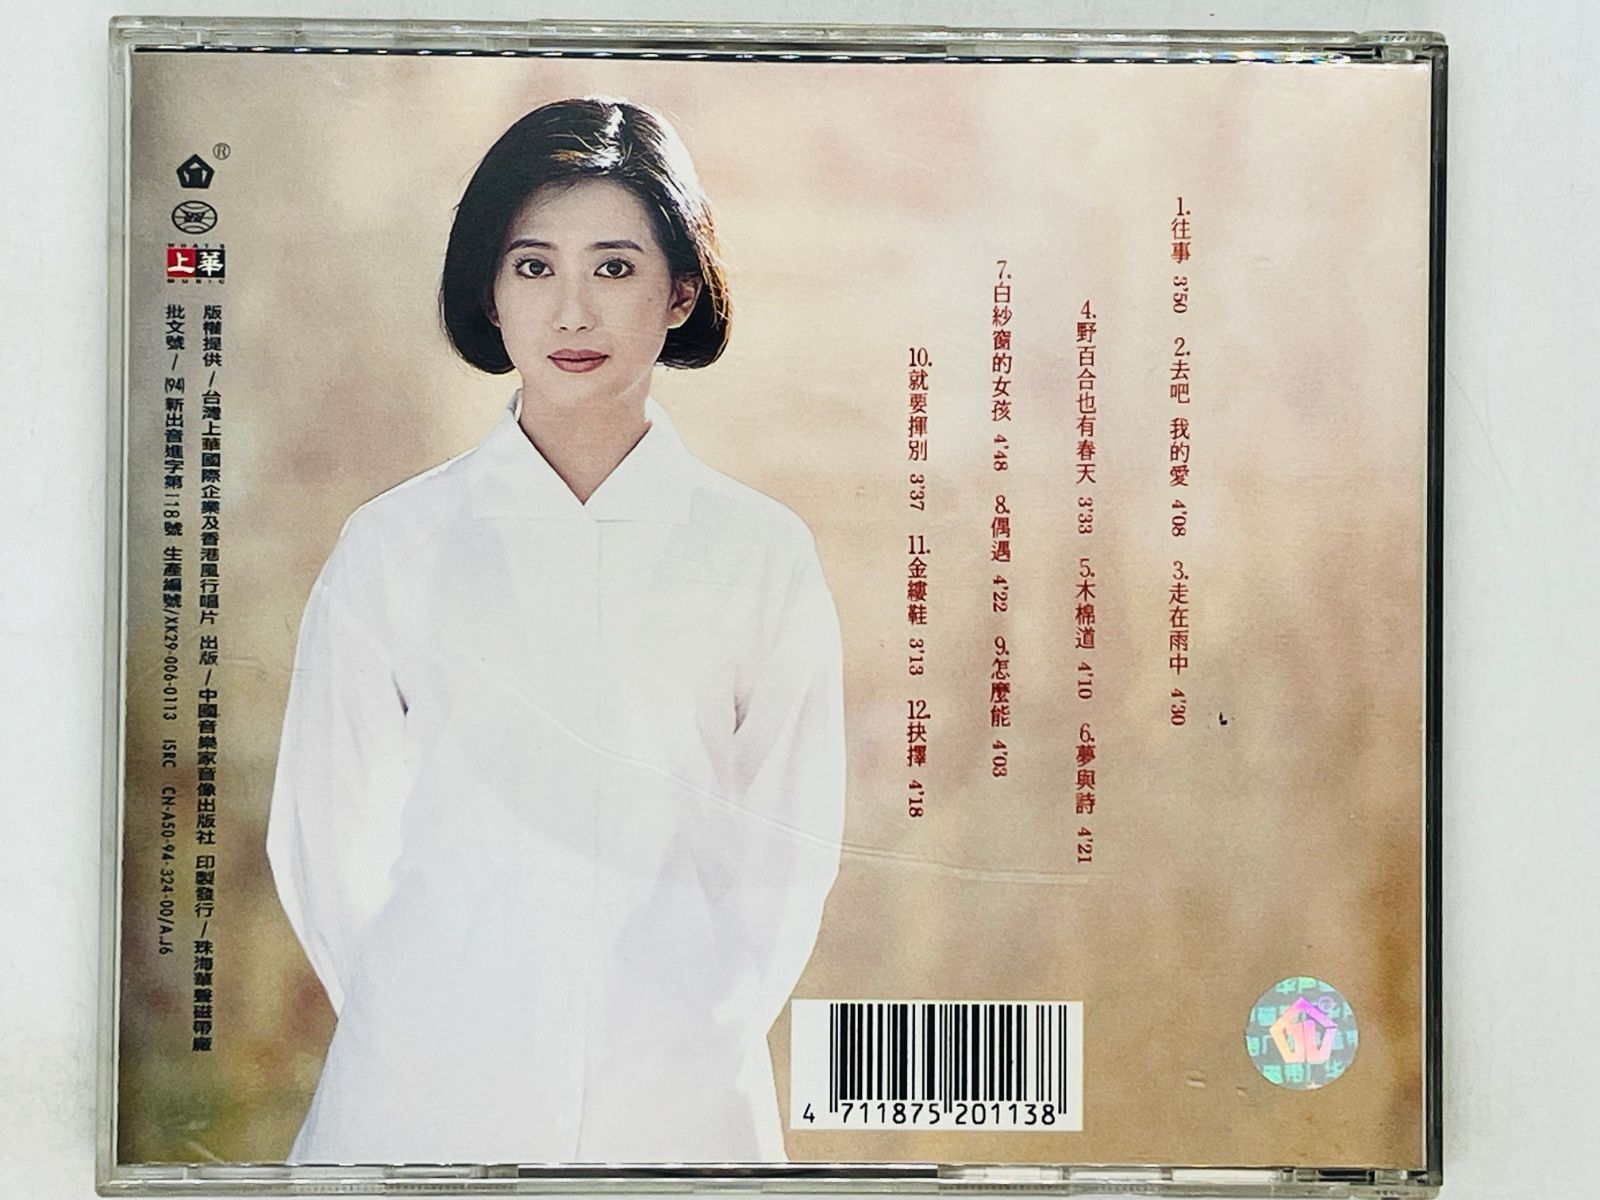 CD アジア盤 孟庭葦 純真年代 / モンティンウェイ / Meng Ting Wei / 激レア 希少 K01 - メルカリ